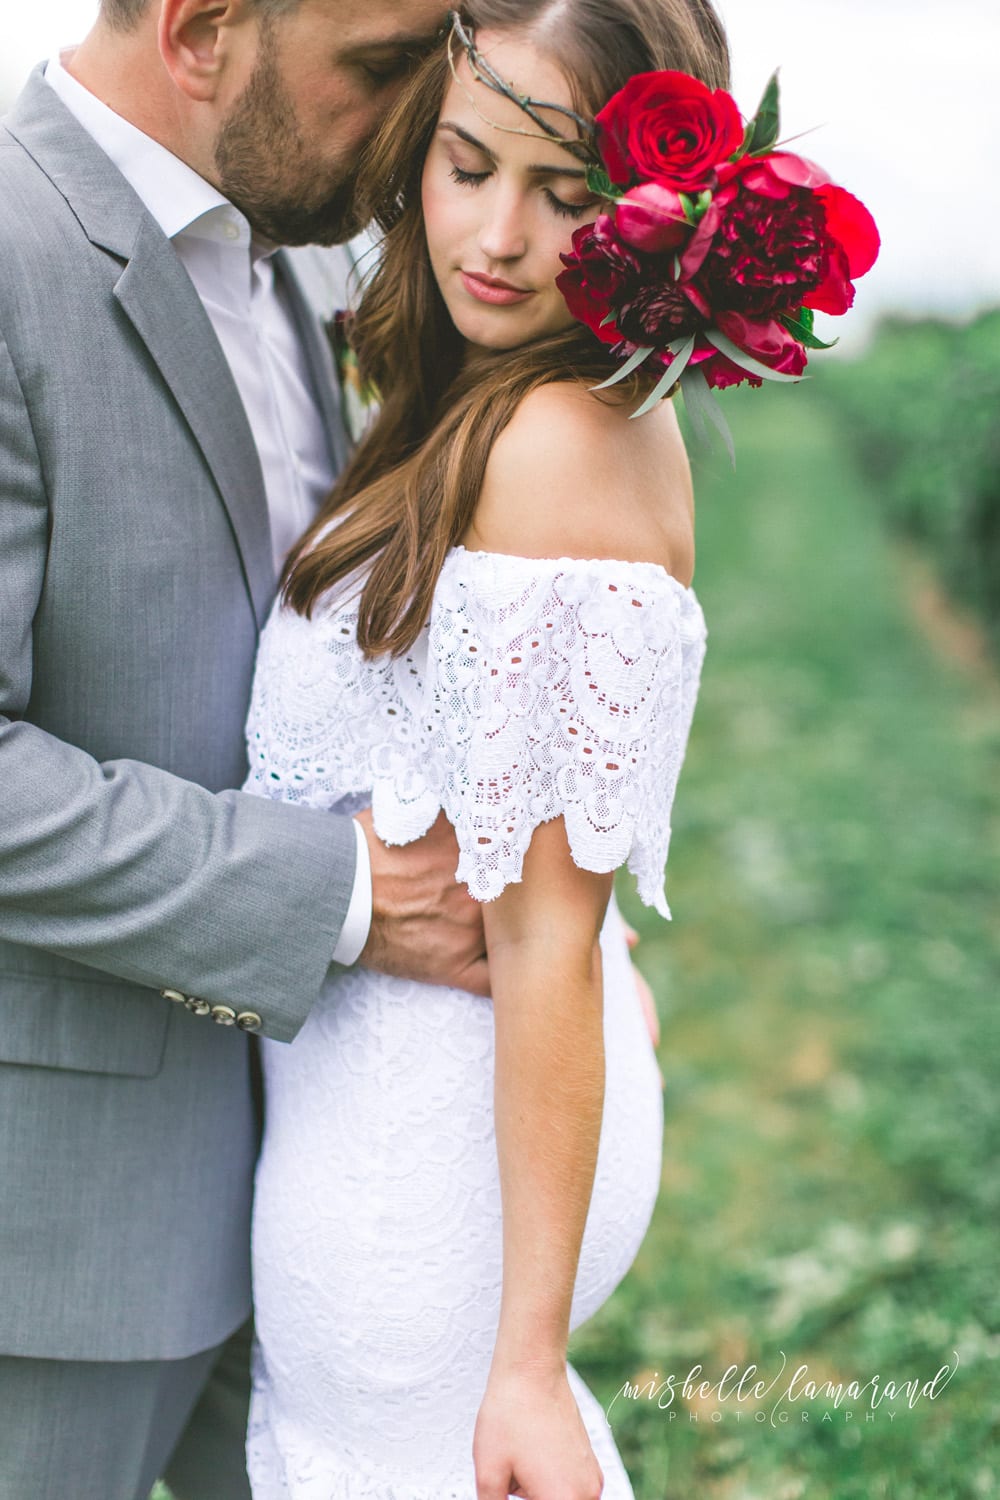 Mishelle Lamarand PhotographyCiccone Voneyard & WineryNorthern Michigan Wedding PhotographerSuttons Bay Wedding Photographer (4)